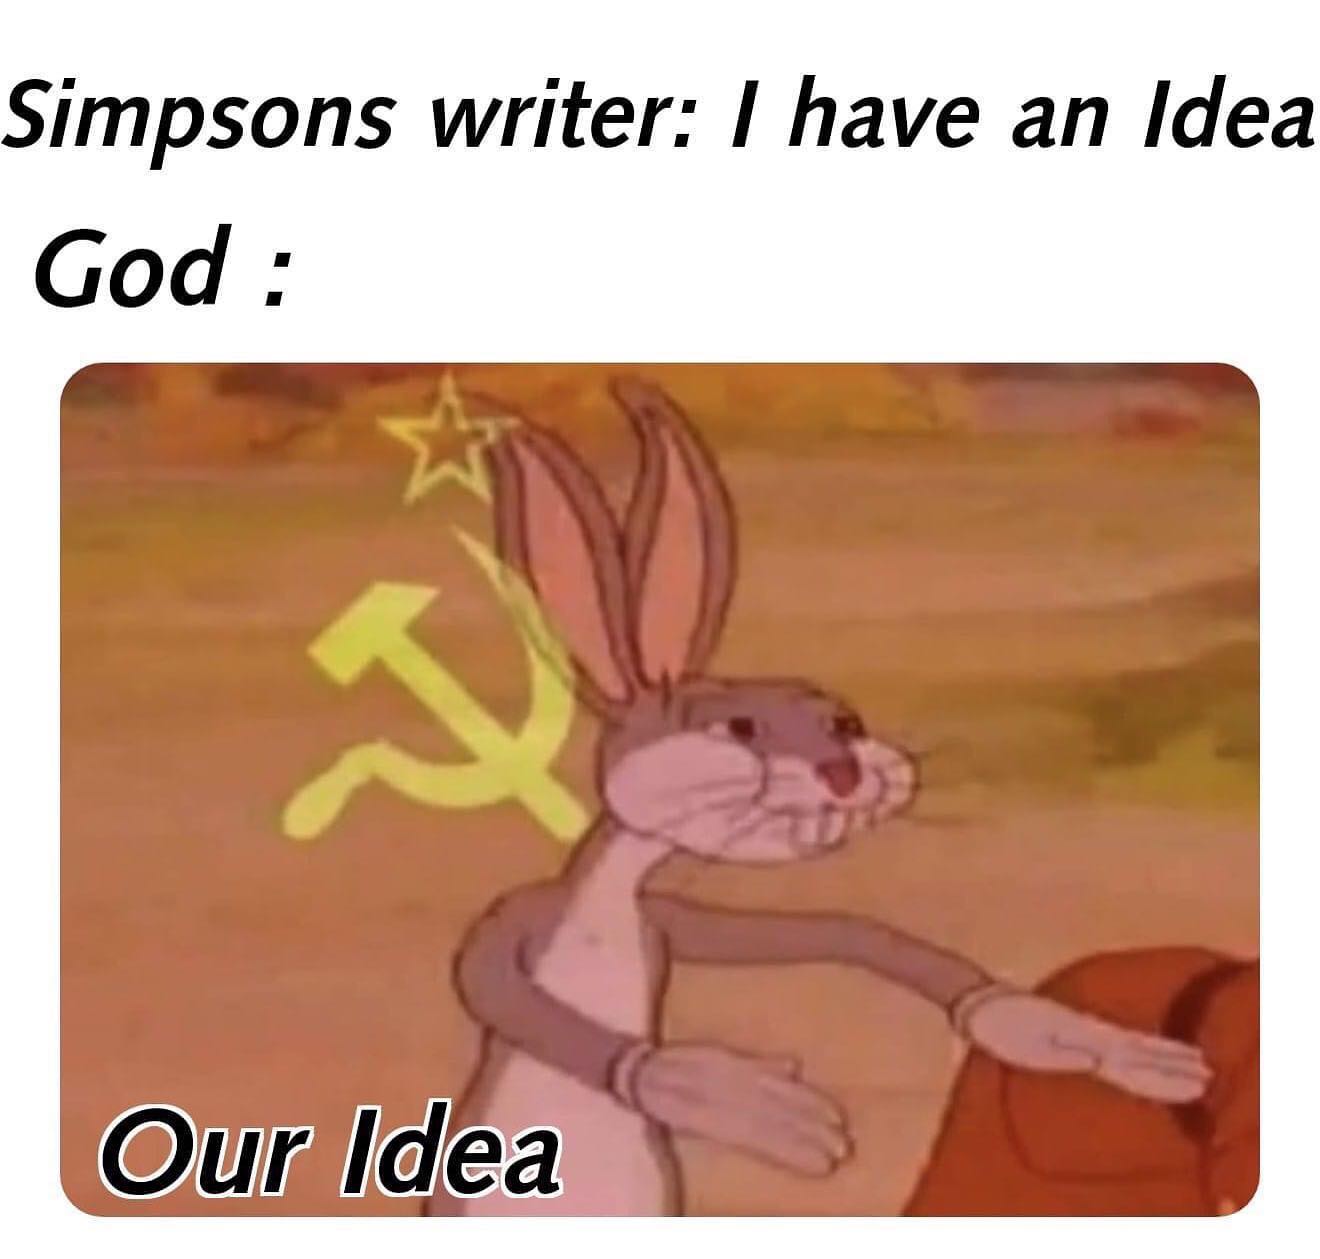 dank memes - communist bugs bunny meme - Simpsons writer I have an Idea God Our Idea